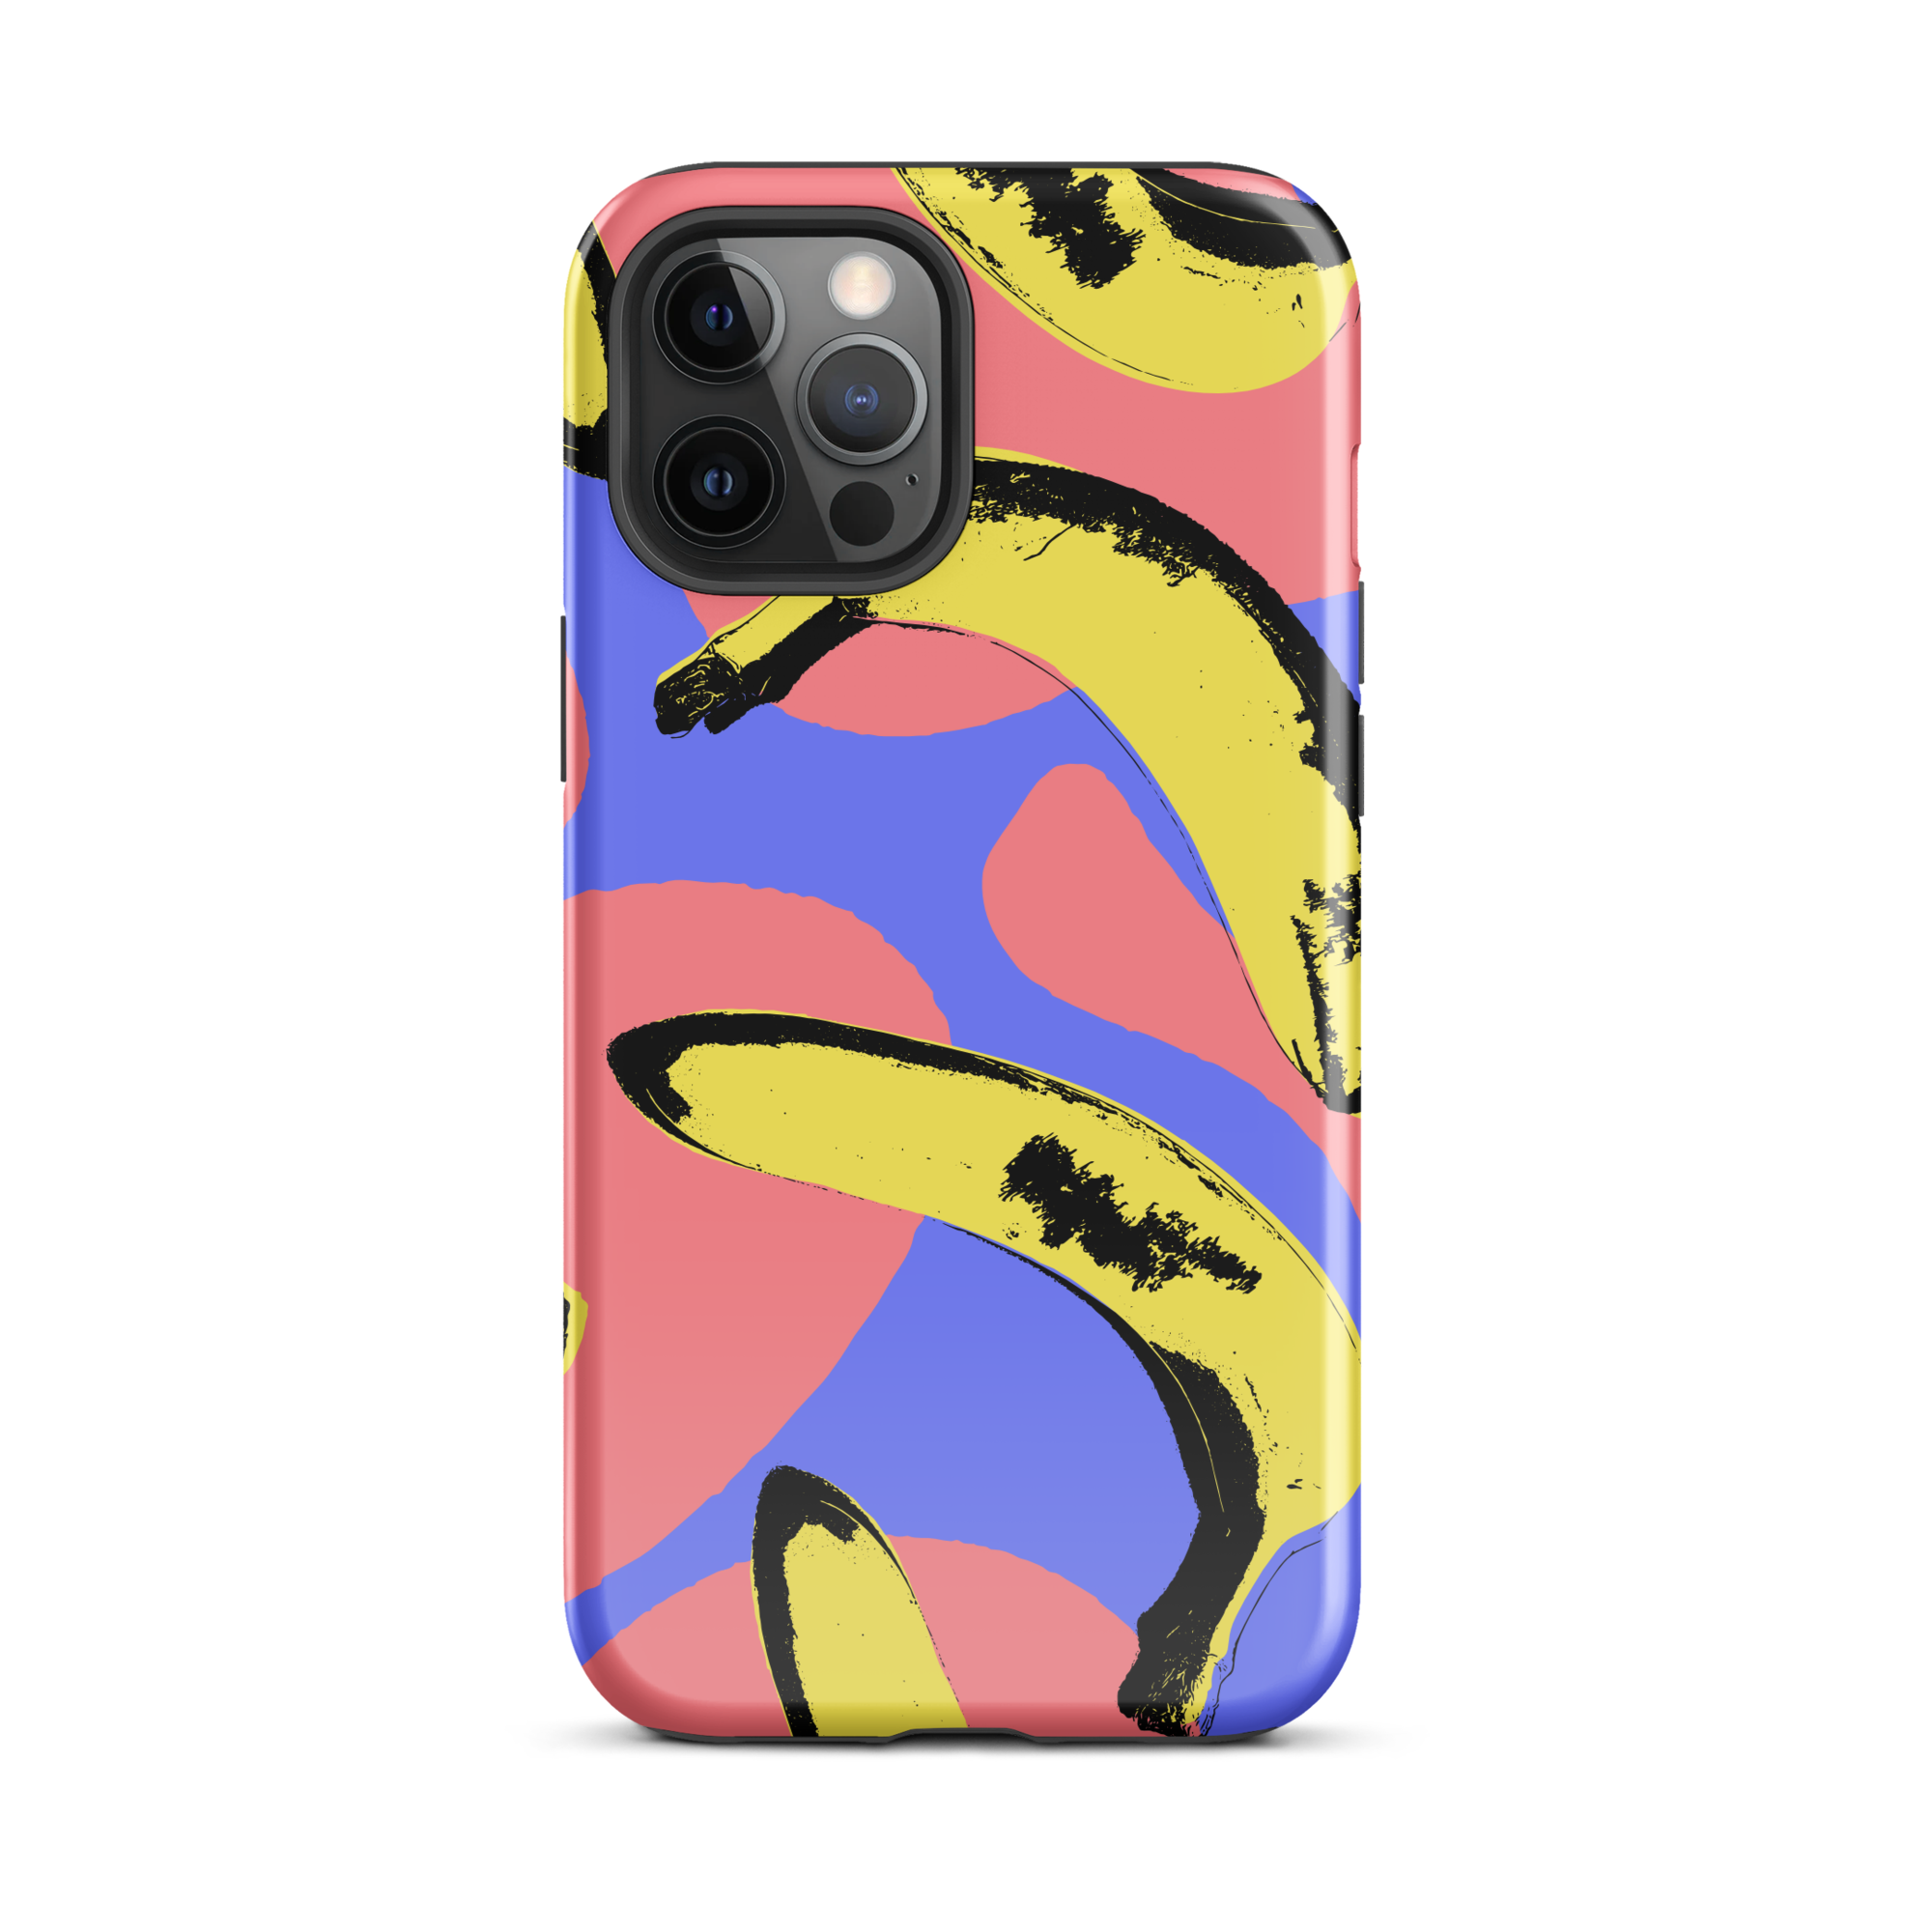 Banana iPhone 12 Pro Max Case